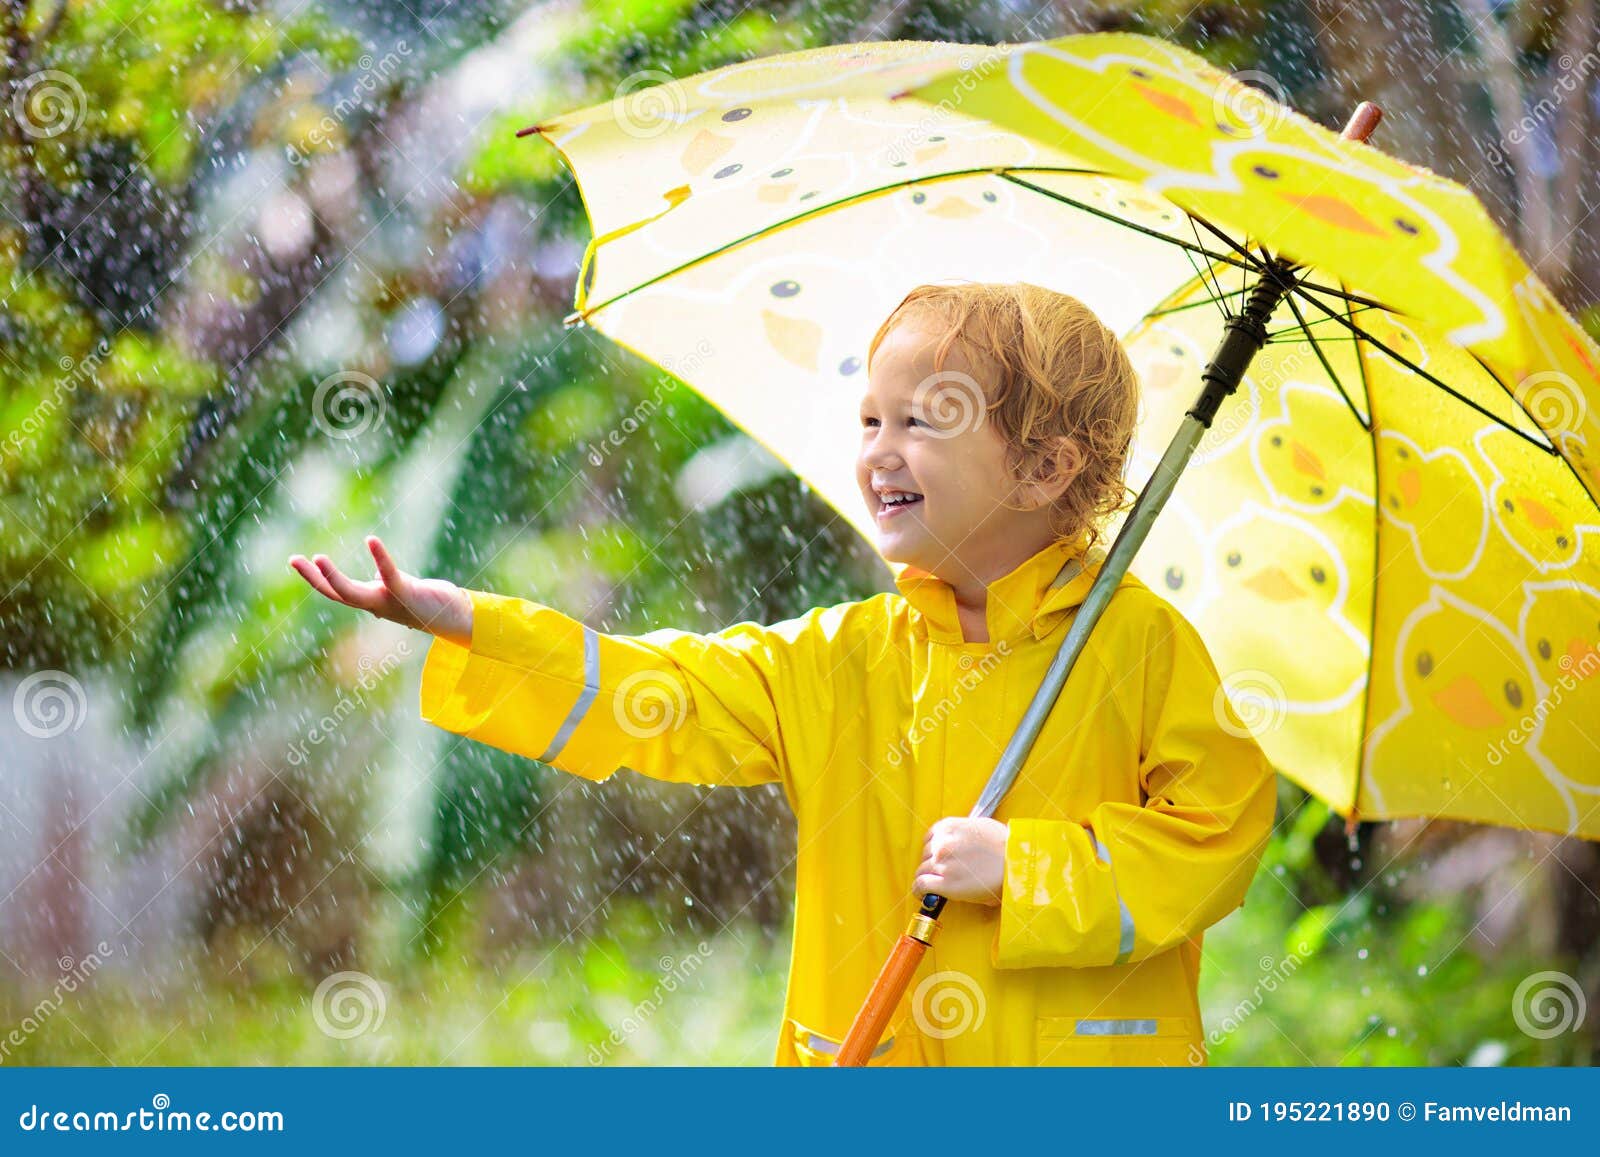 Farmyard Animals Design Kids Children School Outdoor Sunny Rainy Day Umbrella 